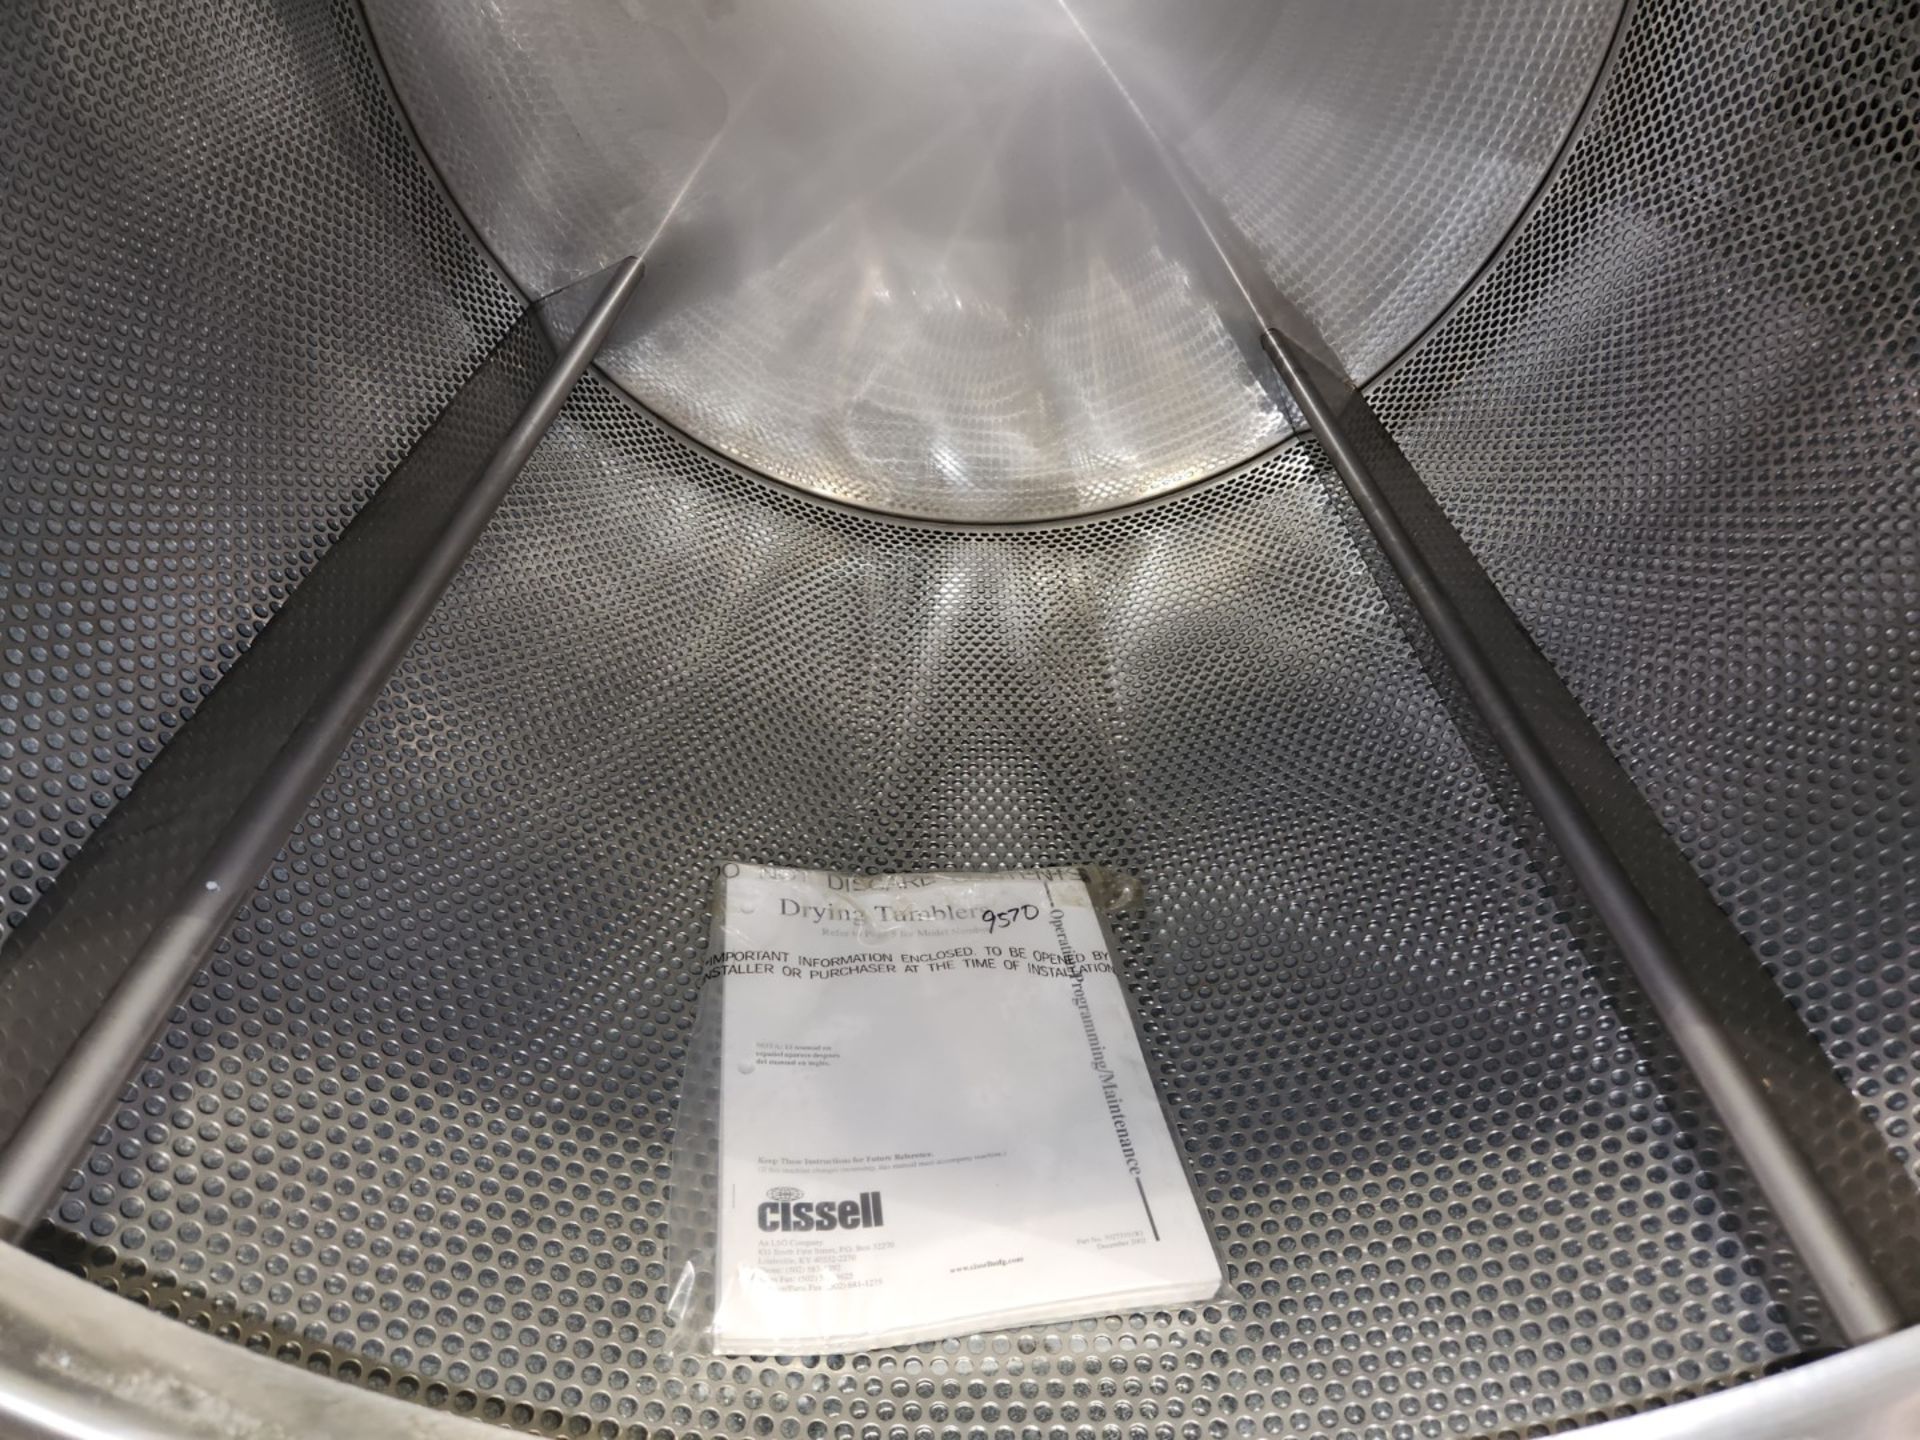 Cissell filter bag tumbler dryer, model CT075EDOF5S1N01, 36" stainless steel drum, 30 kW heater, - Image 8 of 8